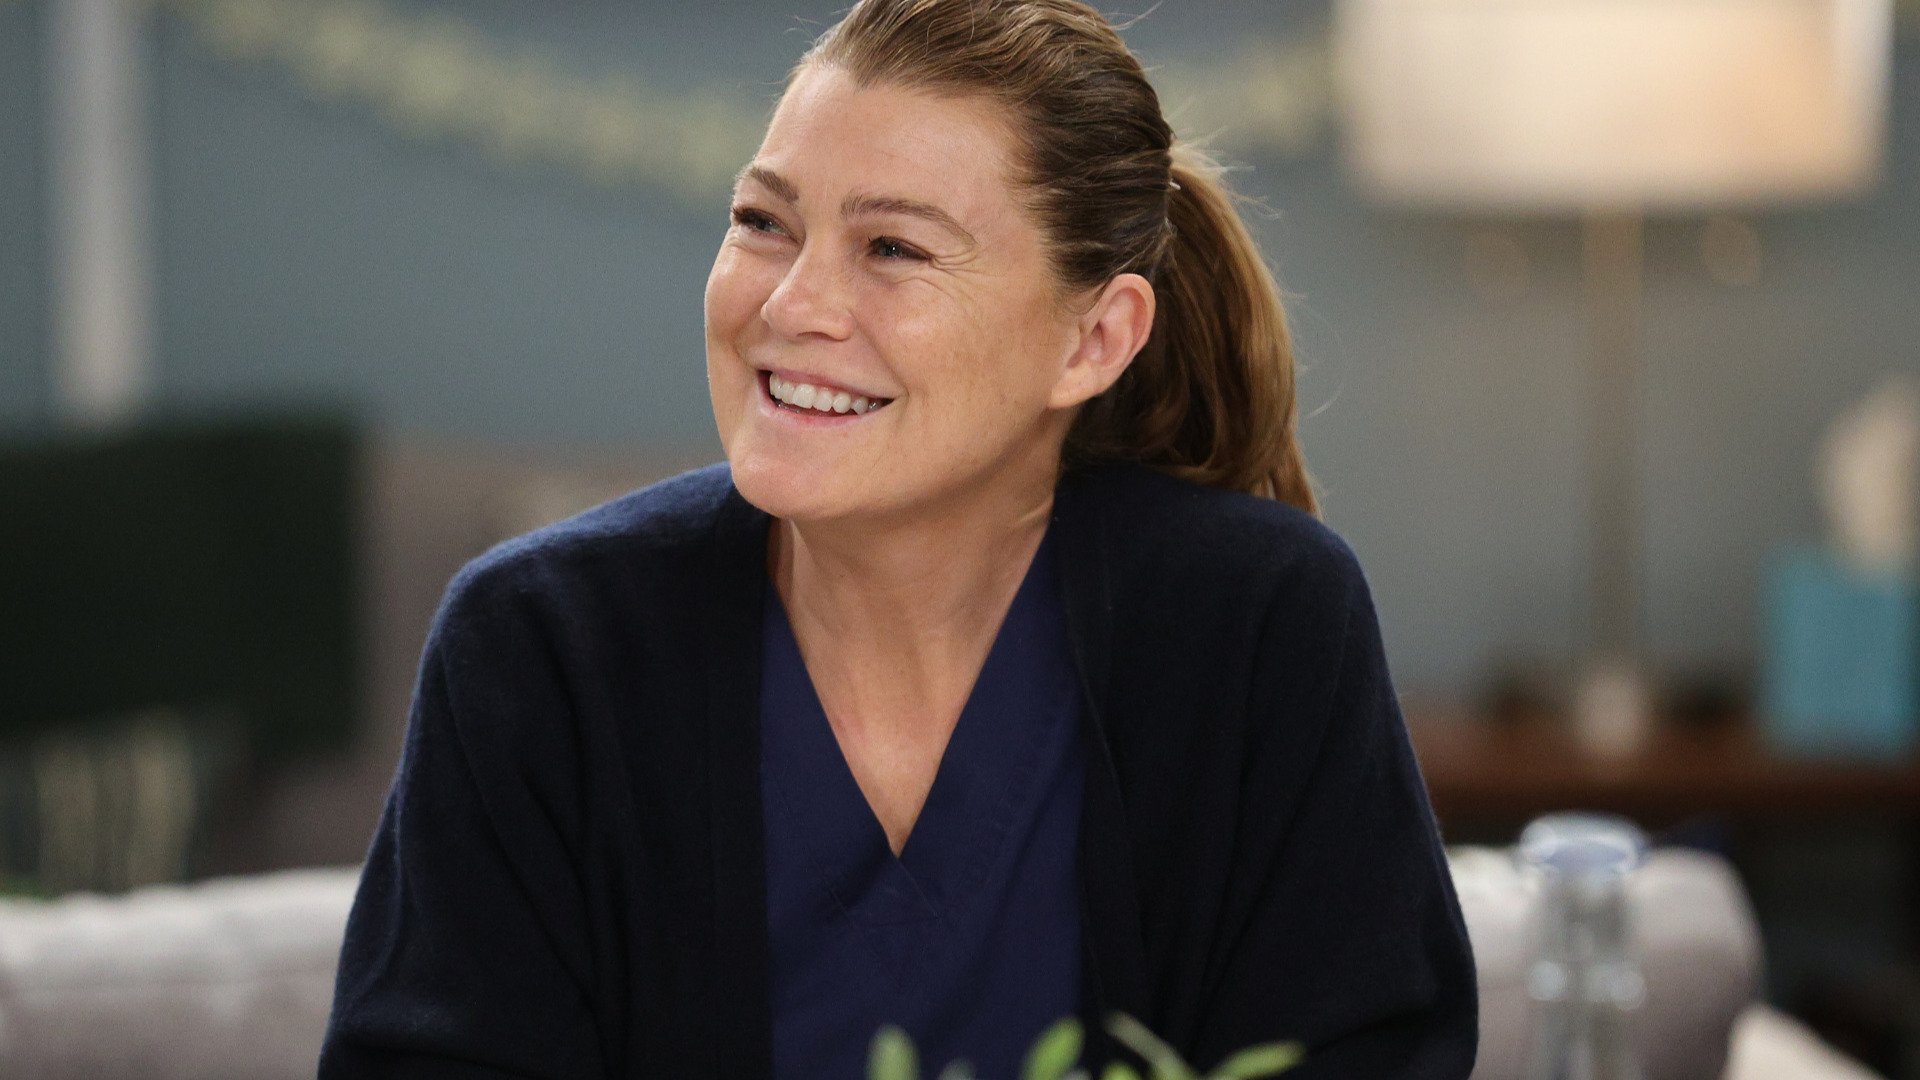 Ellen Pompeo as Meredith Grey in ‘Grey’s Anatomy’ Season 18 Episode 8, the winter finale in 2021